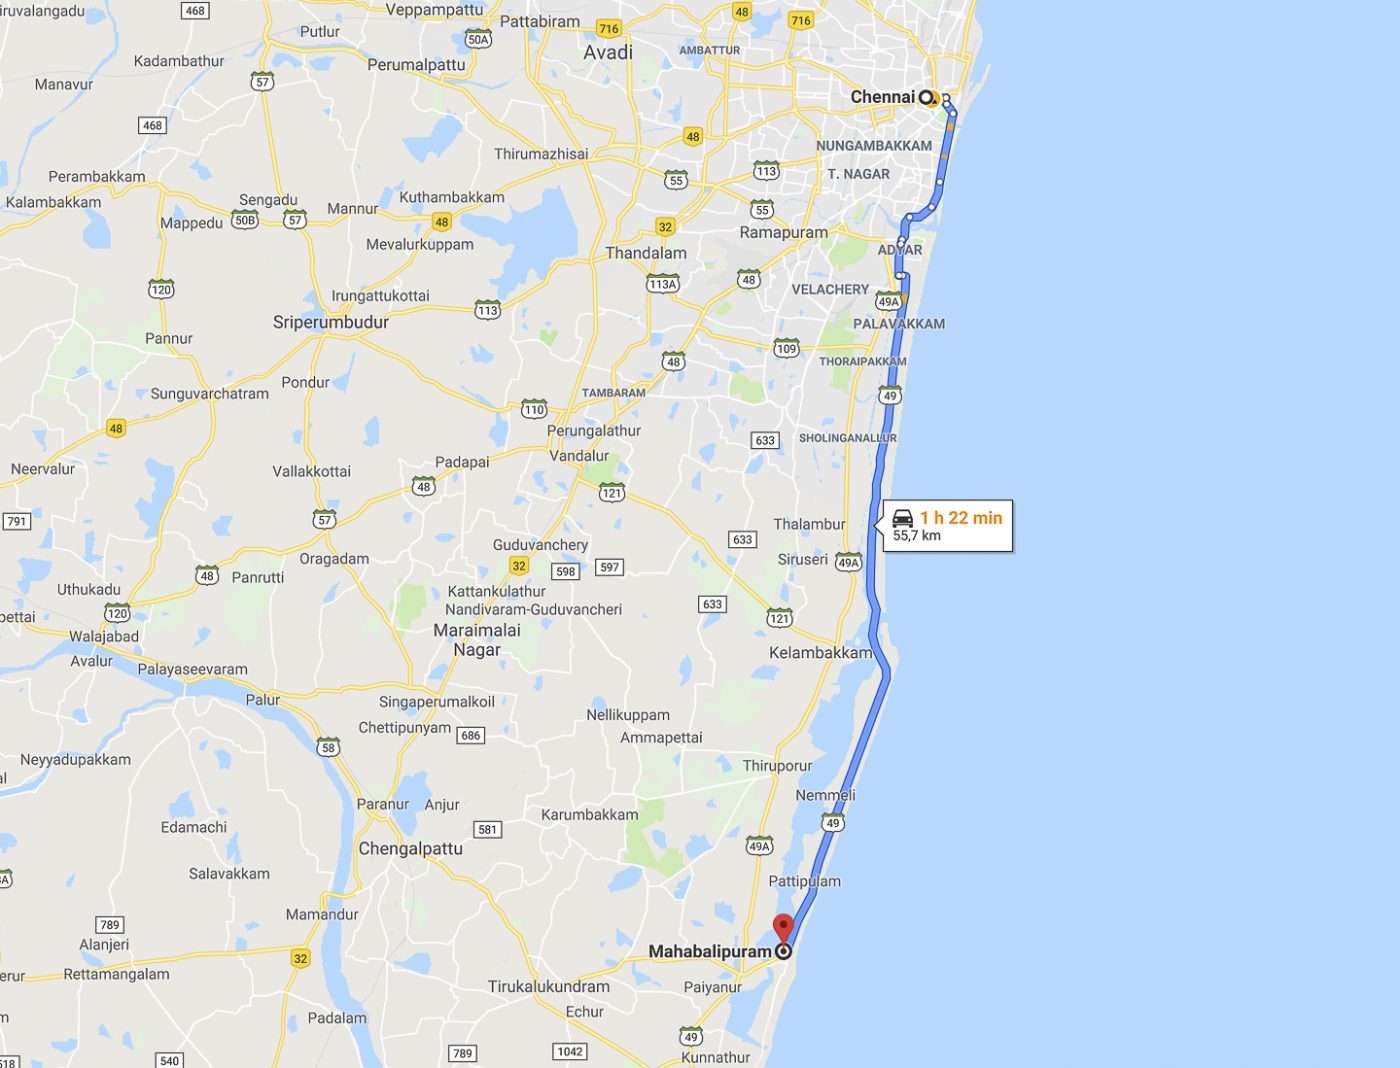 Chennai - Mahabalipuram